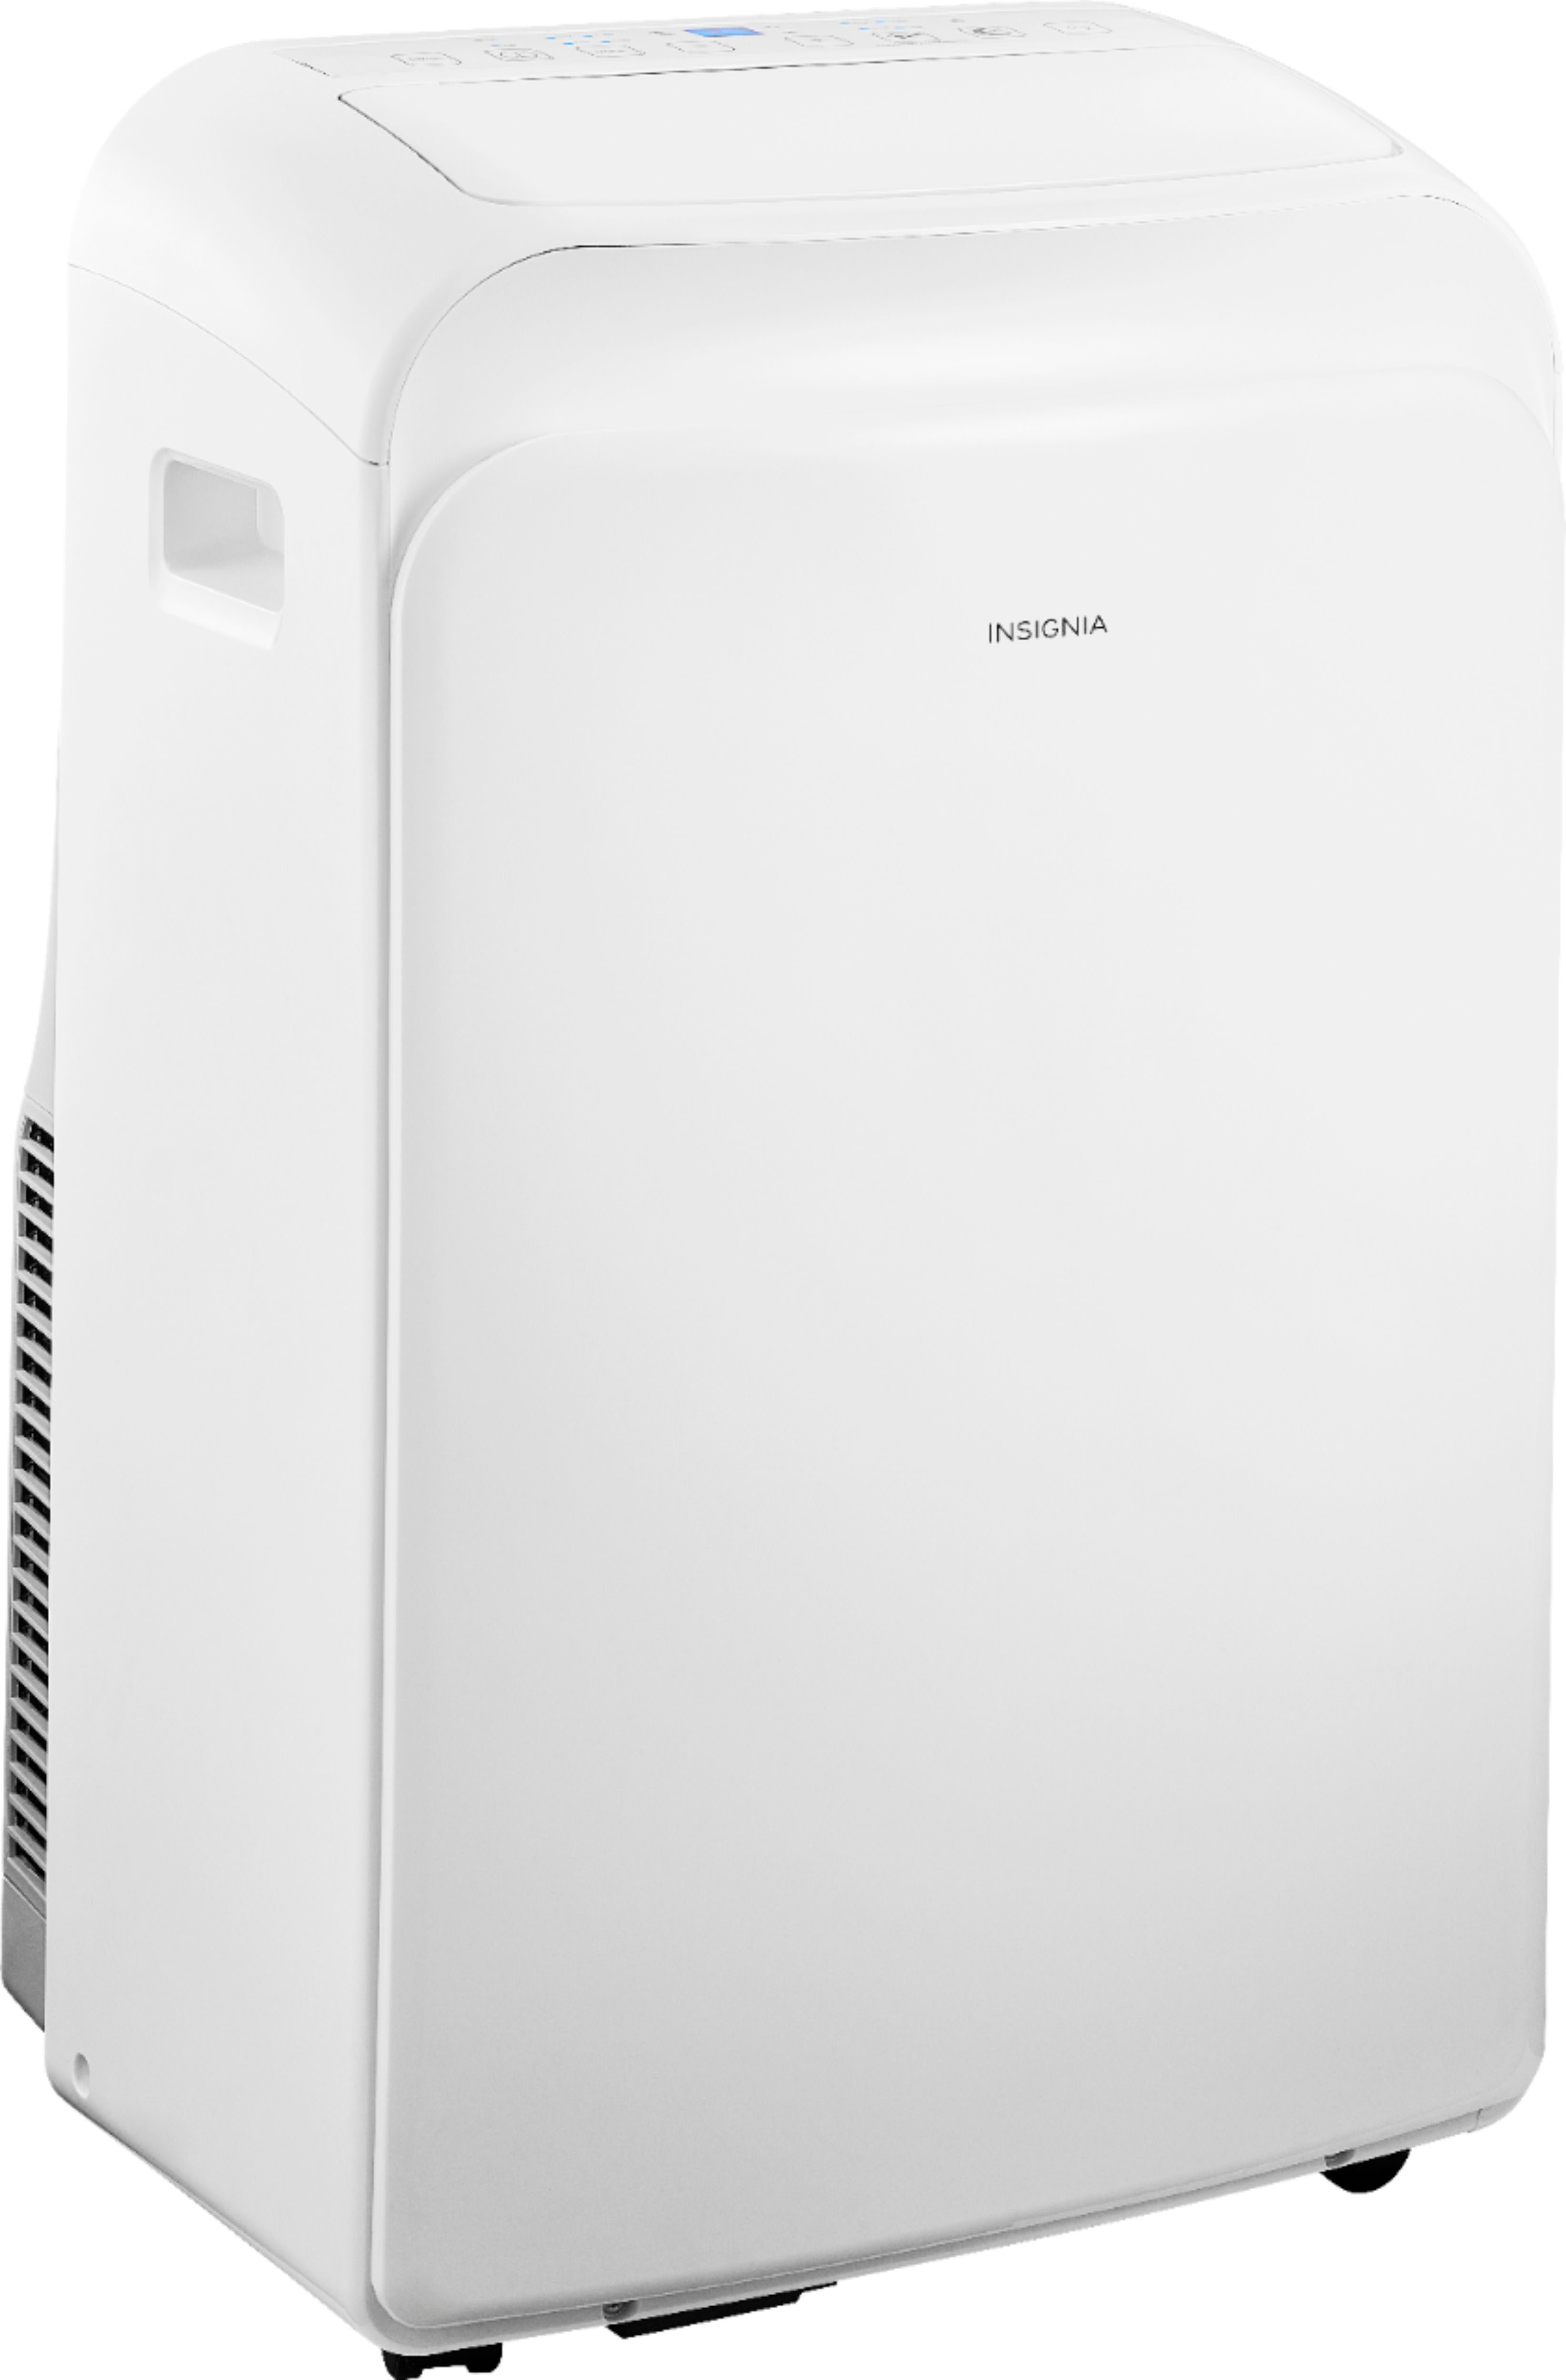 Angle View: Insignia™ - 300 Sq. Ft. Portable Air Conditioner - White